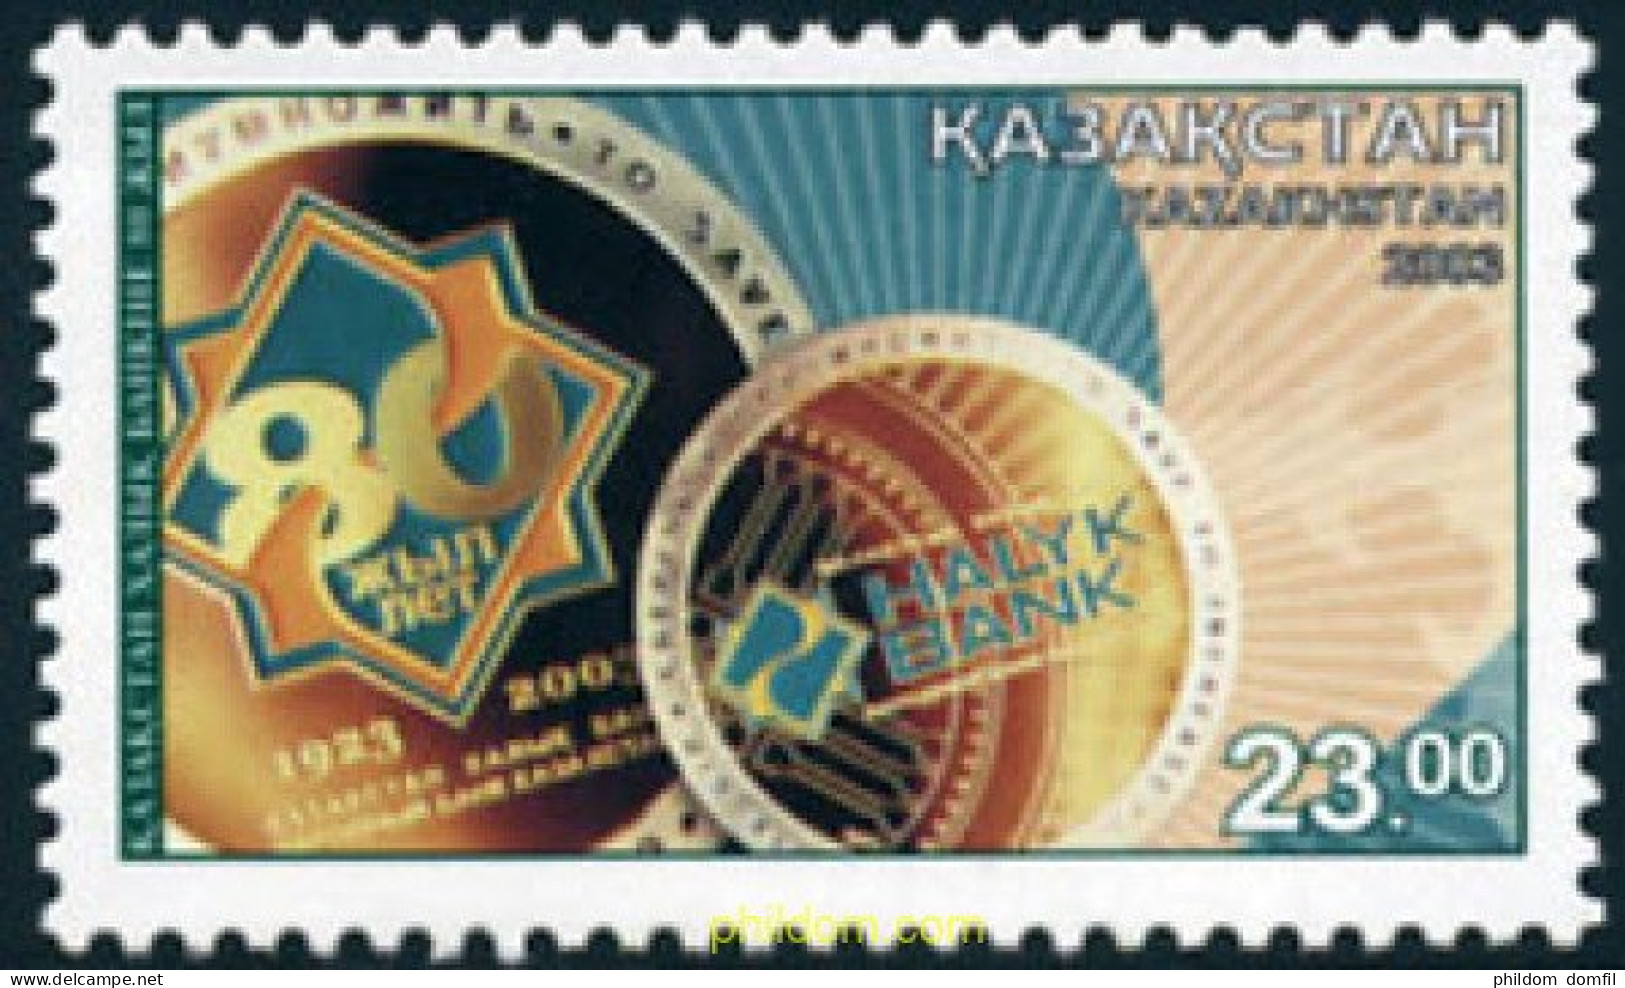 148989 MNH KAZAJSTAN 2003 80 ANIVERSARIO DEL BANCO HALYK - Kazakhstan